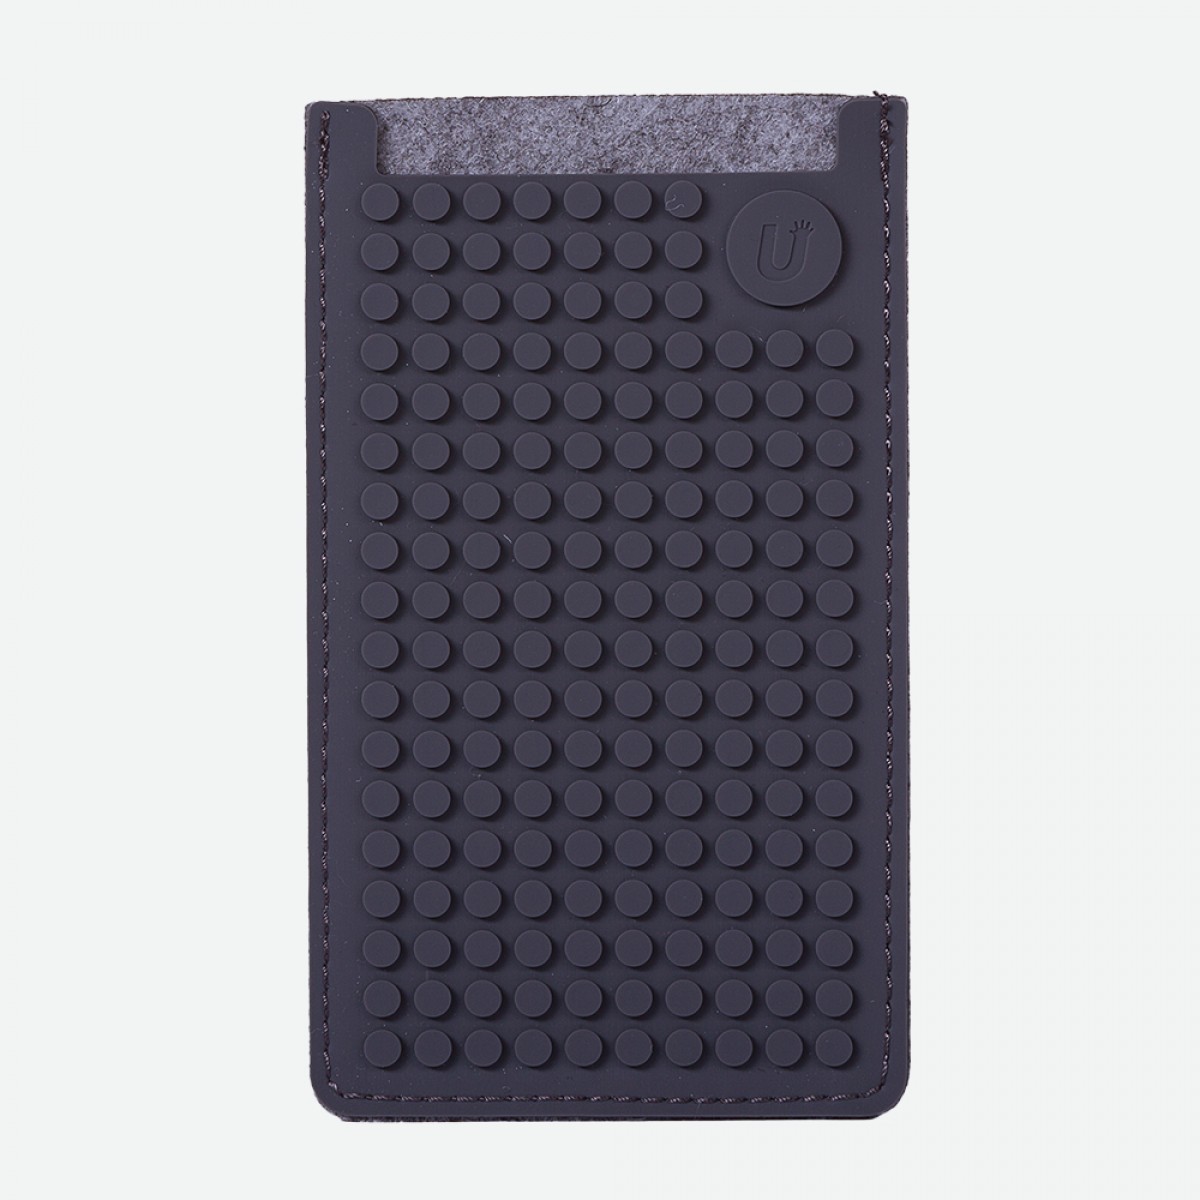 UPixel Pixel Phone Case Small - Grey